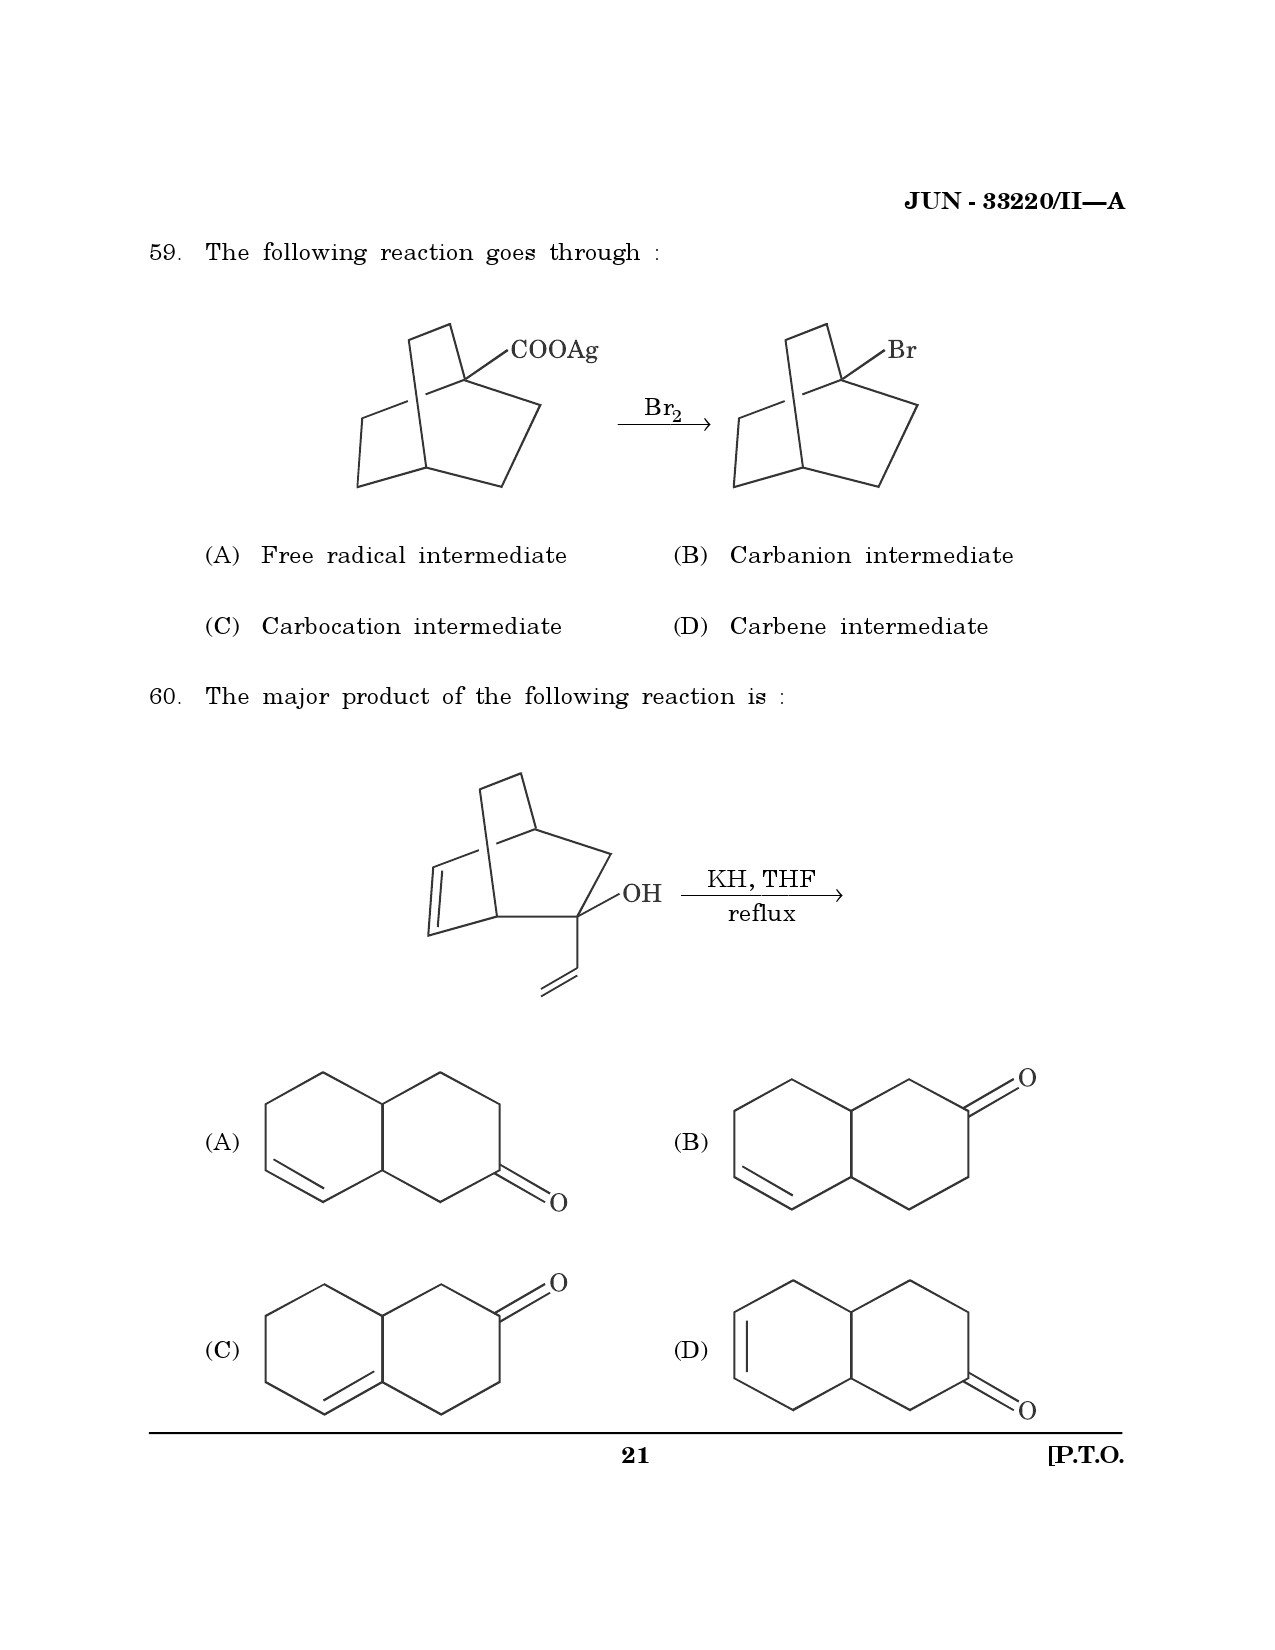 Maharashtra SET Chemical Sciences Question Paper II June 2020 20